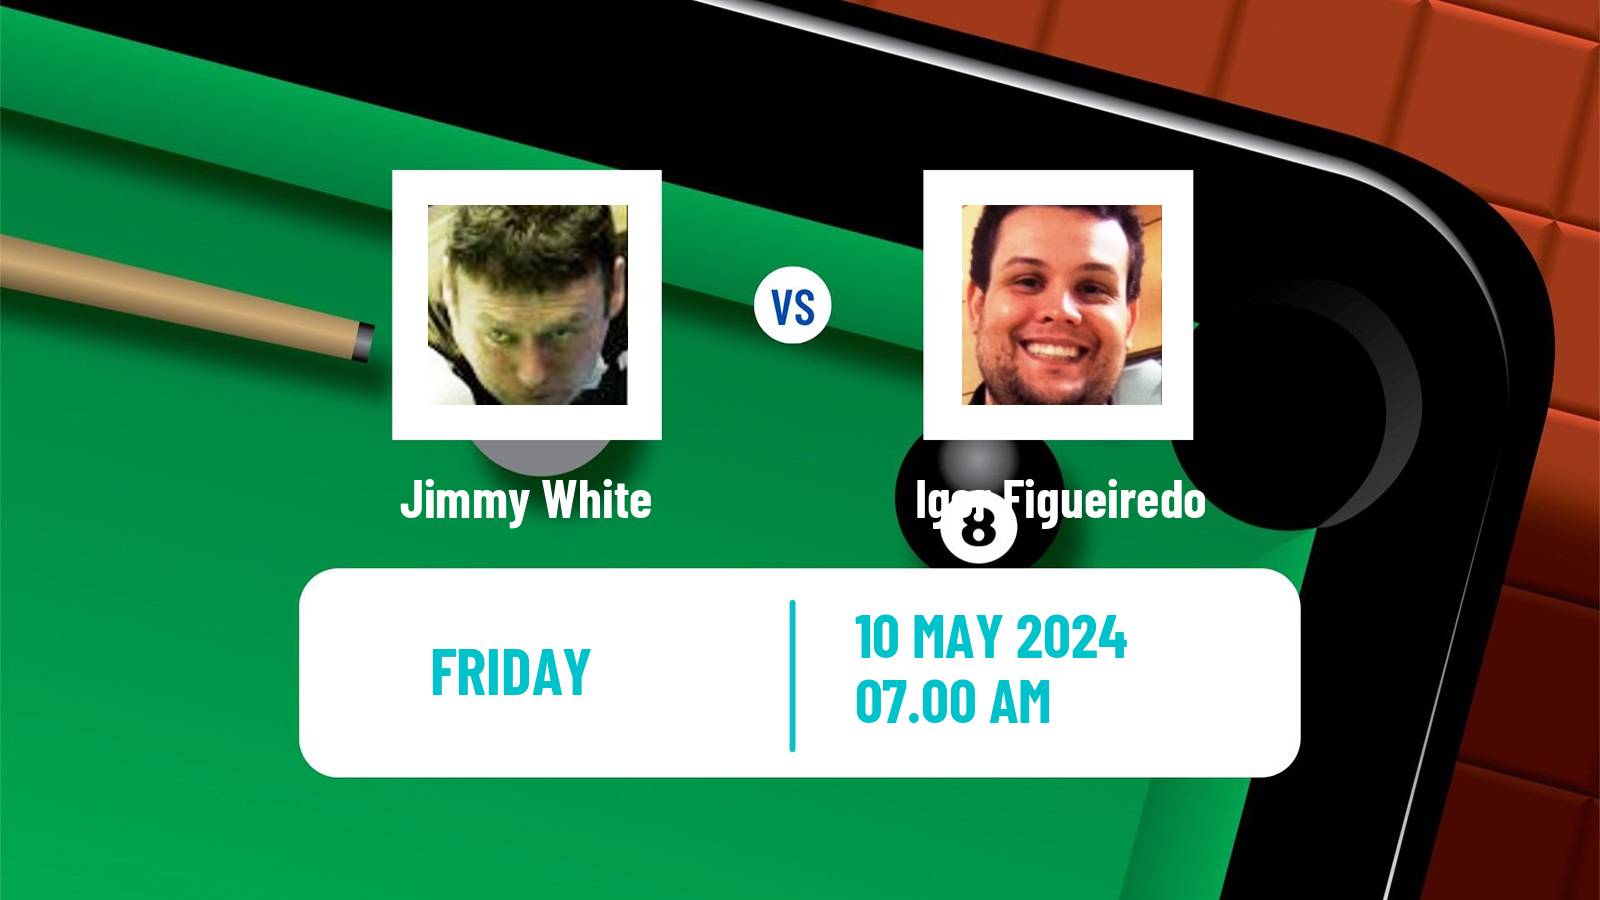 Snooker World Senior Championship Jimmy White - Igor Figueiredo